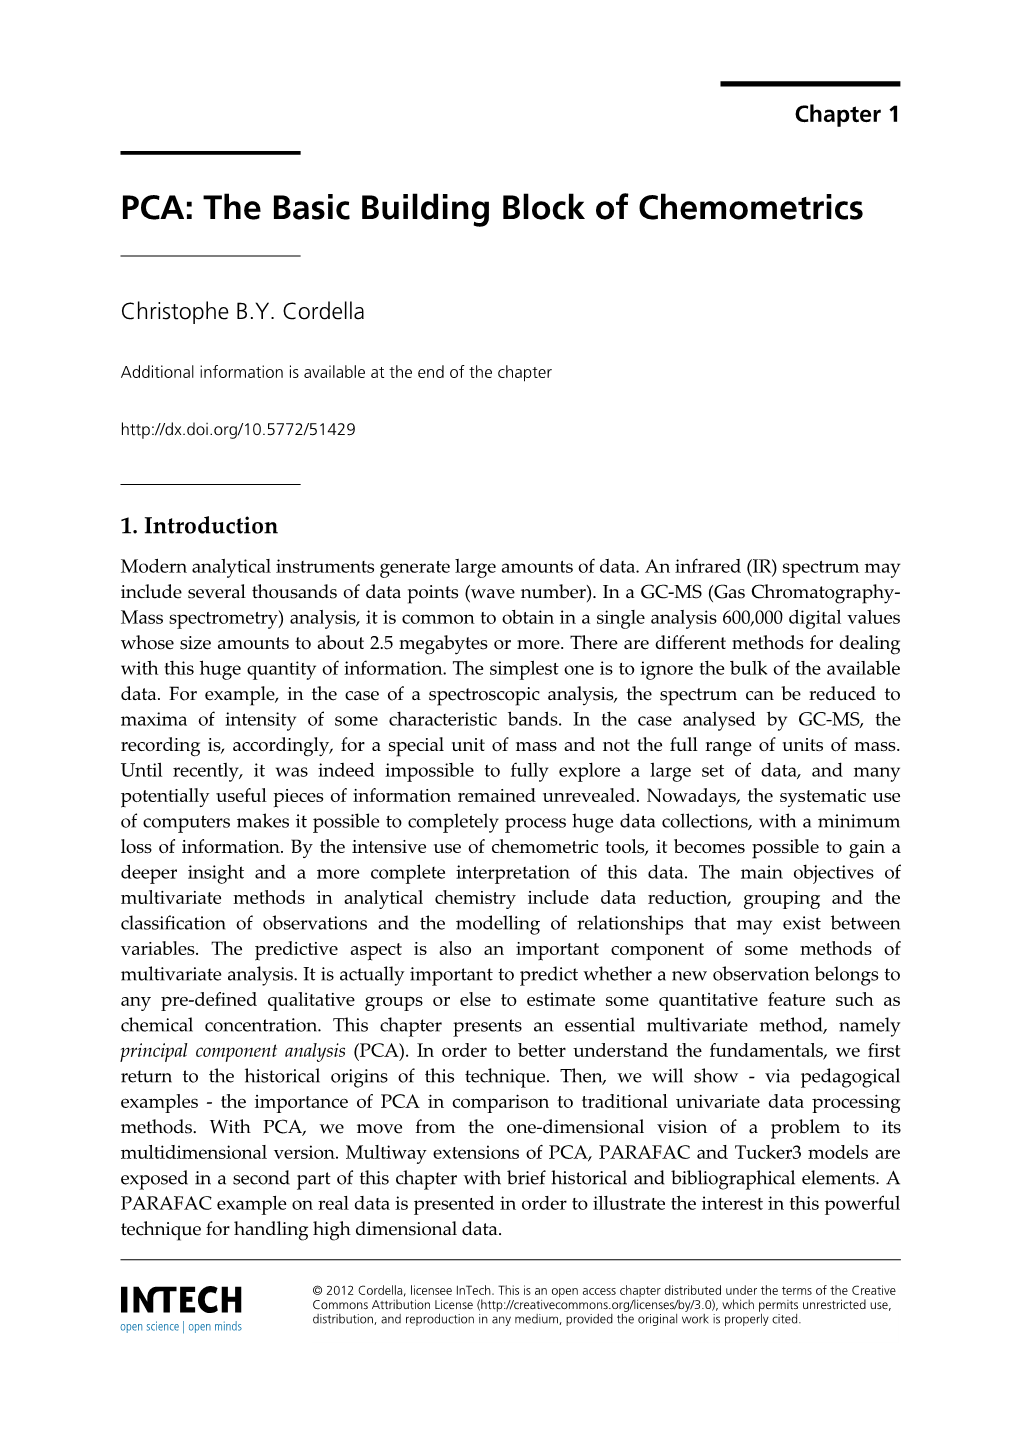 PCA: the Basic Building Block of Chemometrics